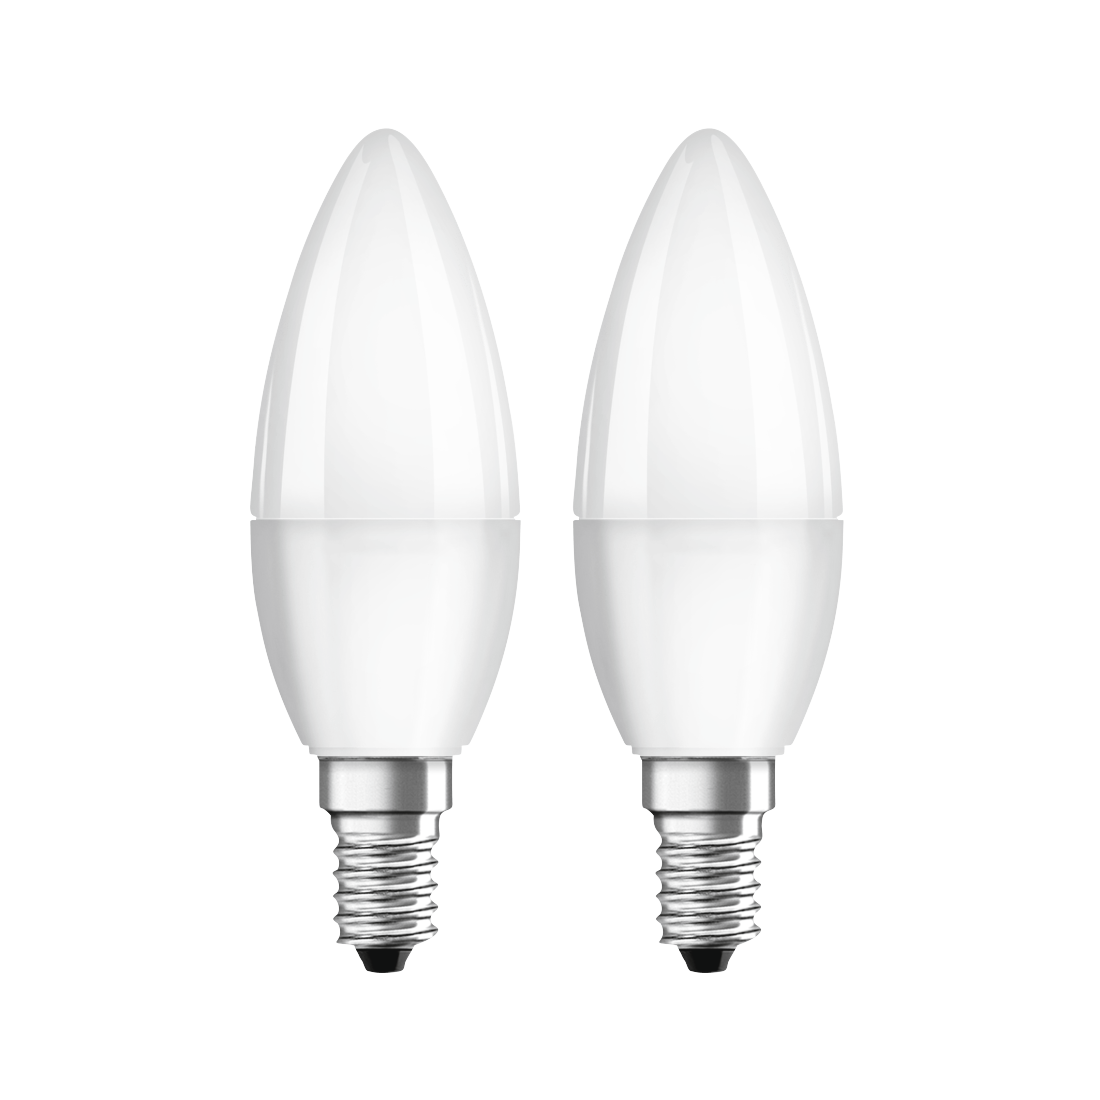 abx Druckfähige Abbildung - Xavax, LED-Lampe, E14, 470lm ersetzt 40W, Kerzenlampe, Warmweiß, 2 Stück